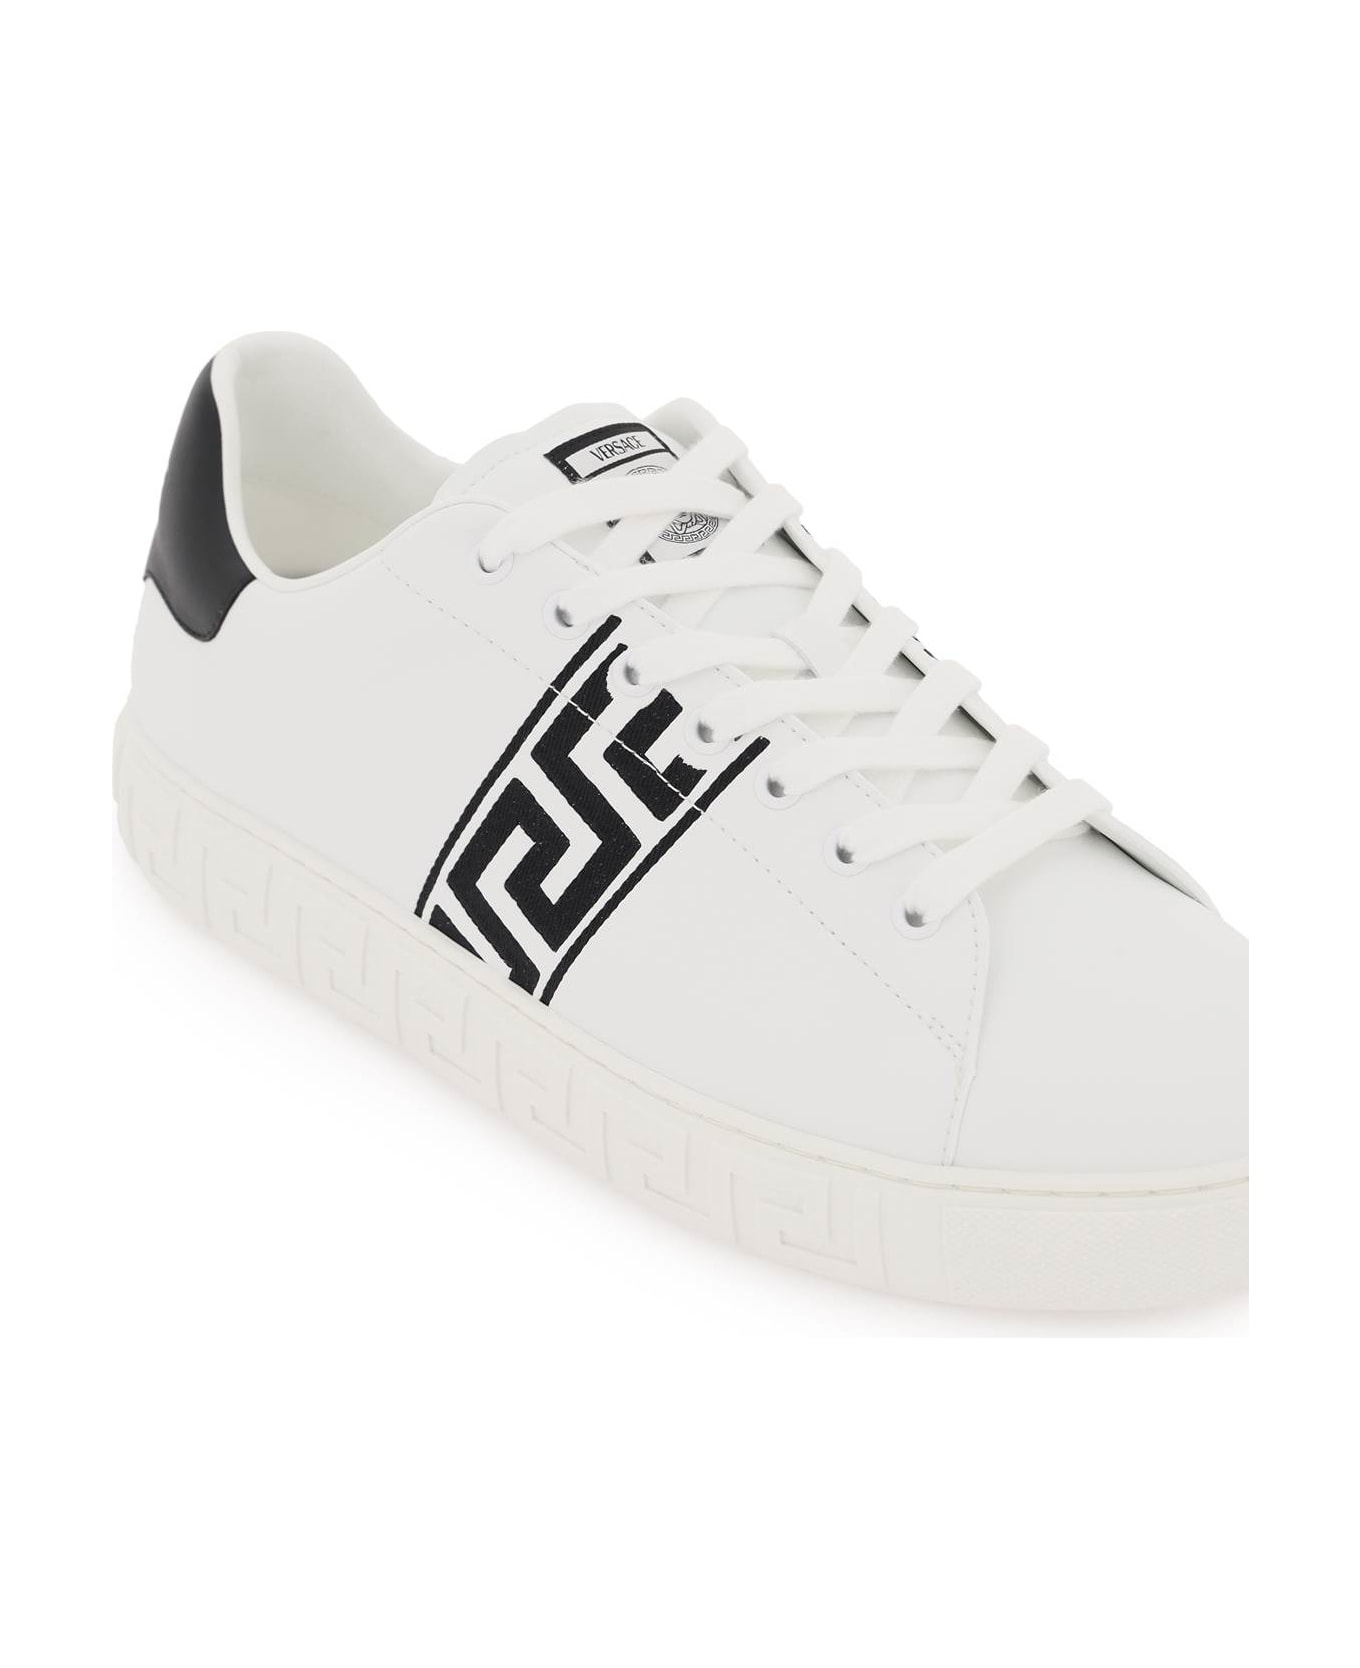 Versace Low Top Sneakers - White